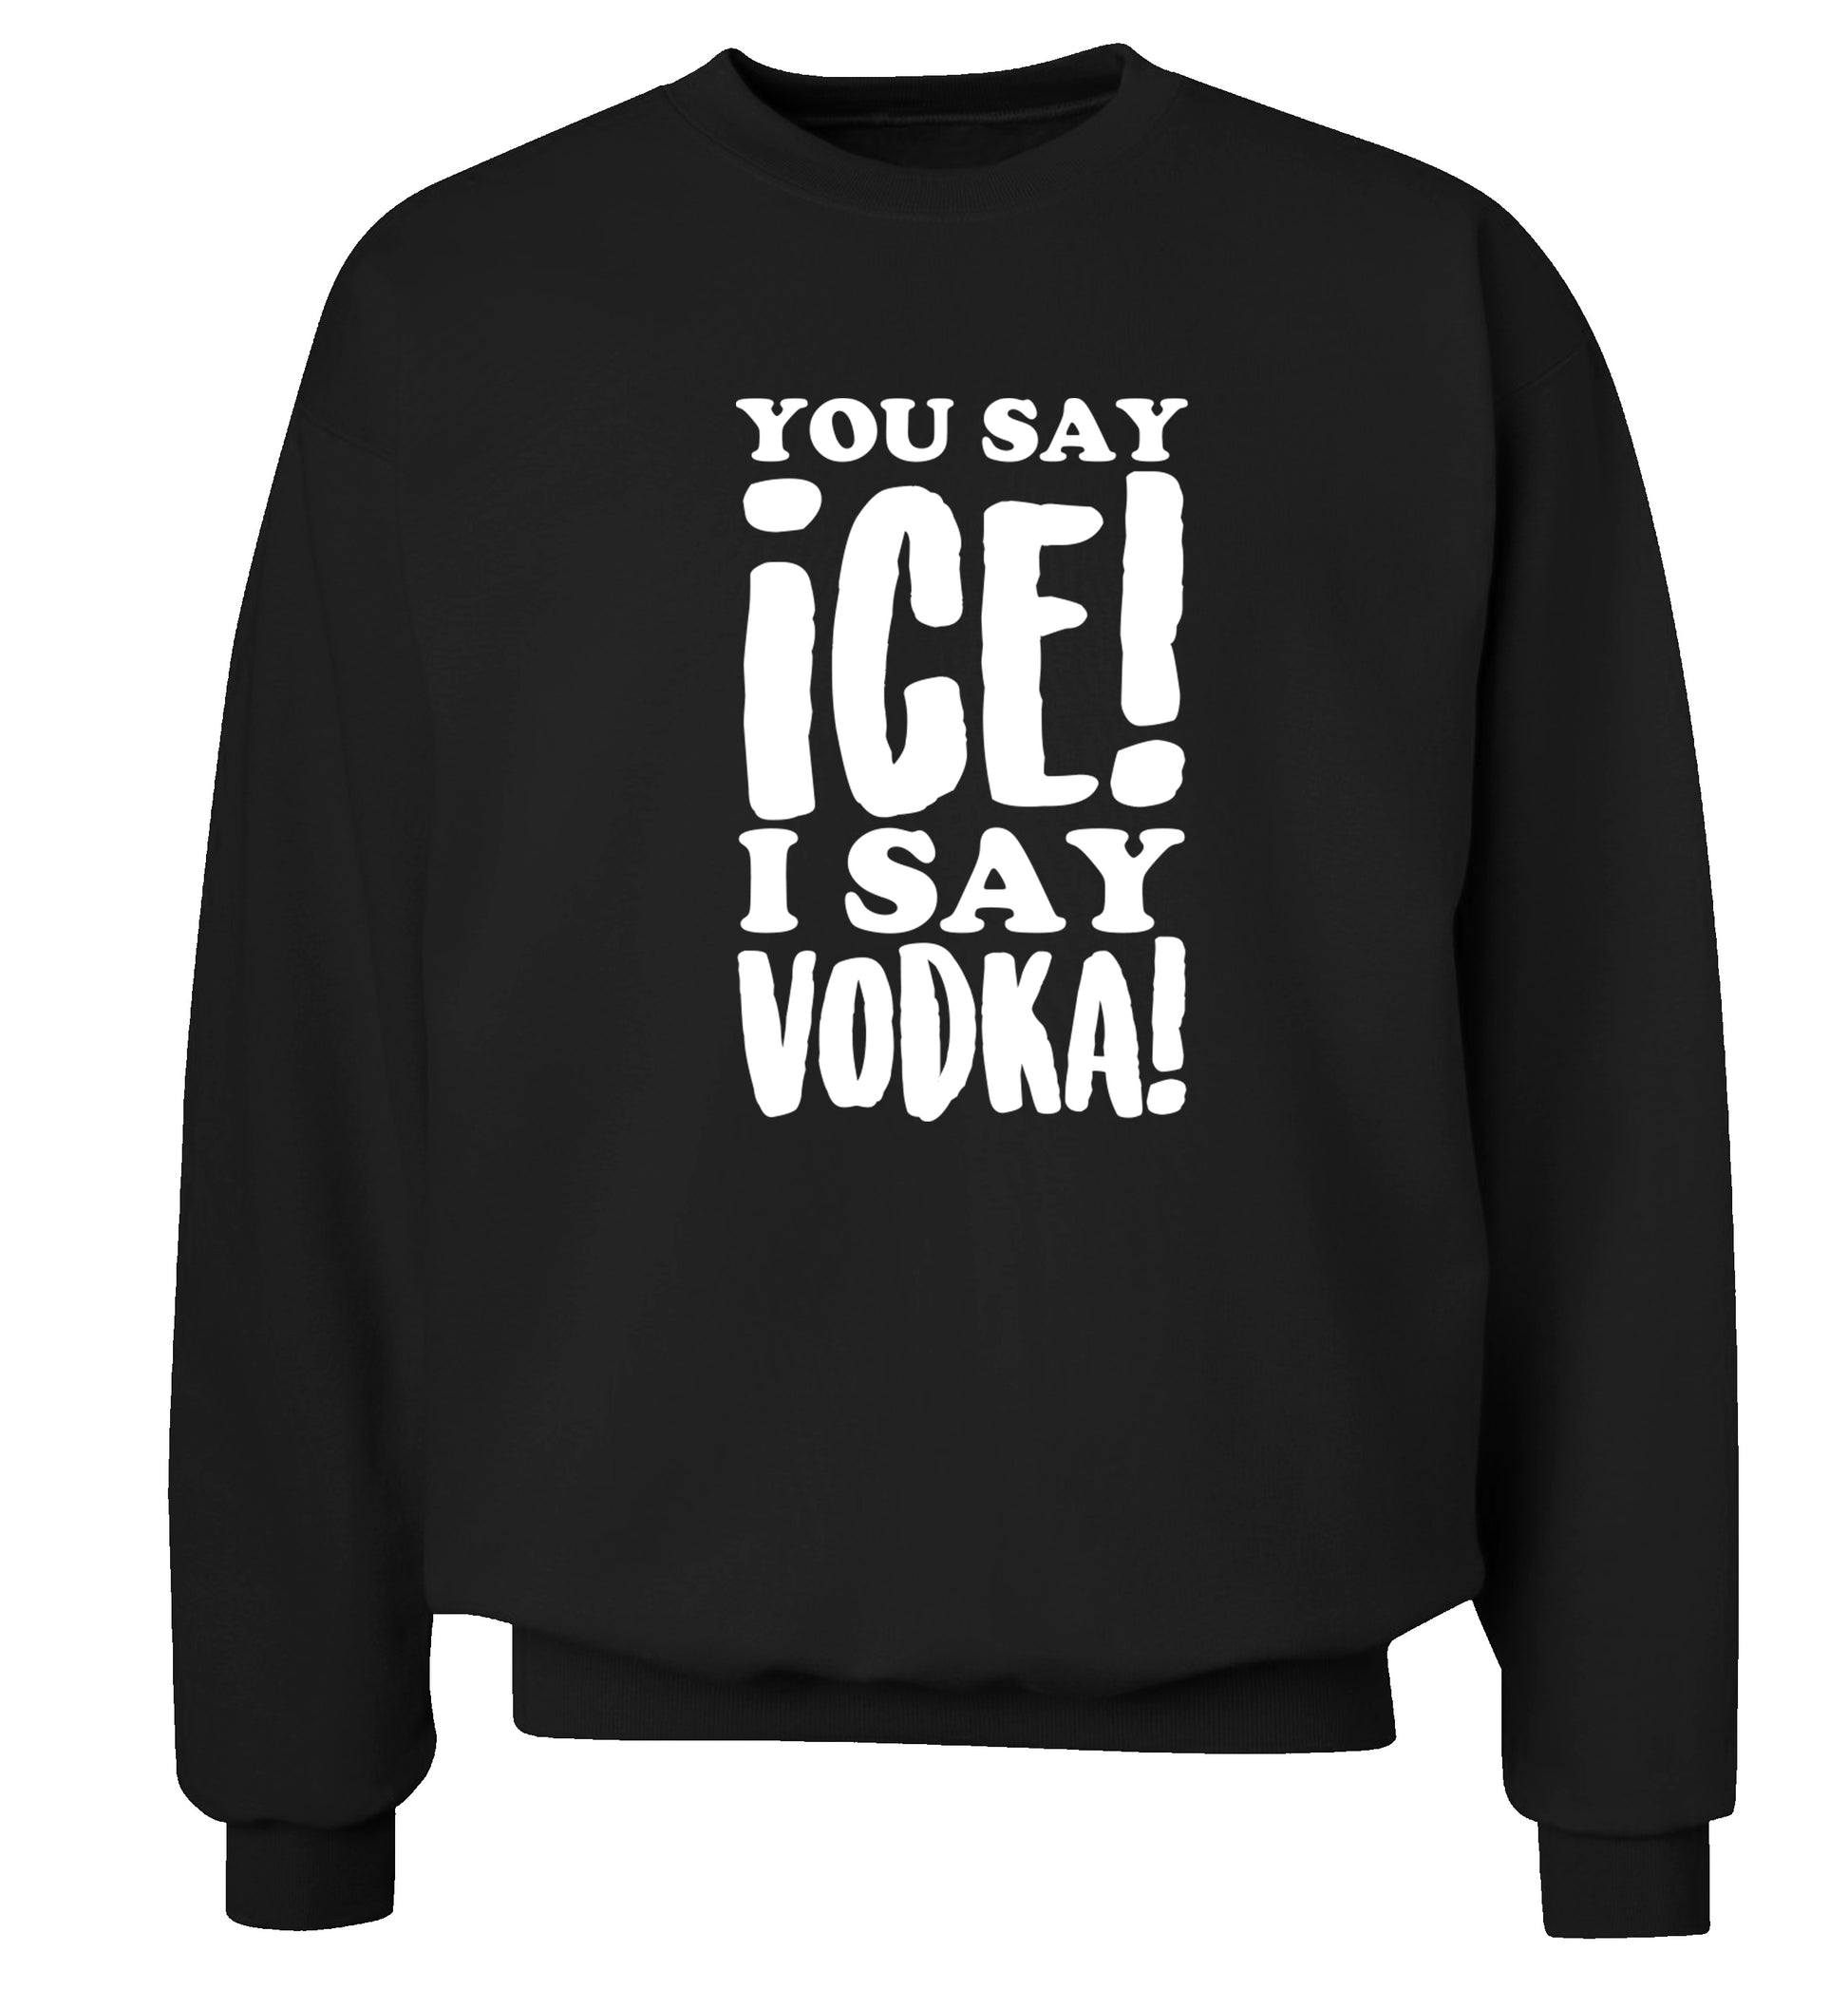 You say ice I say vodka! Adult's unisex black Sweater 2XL